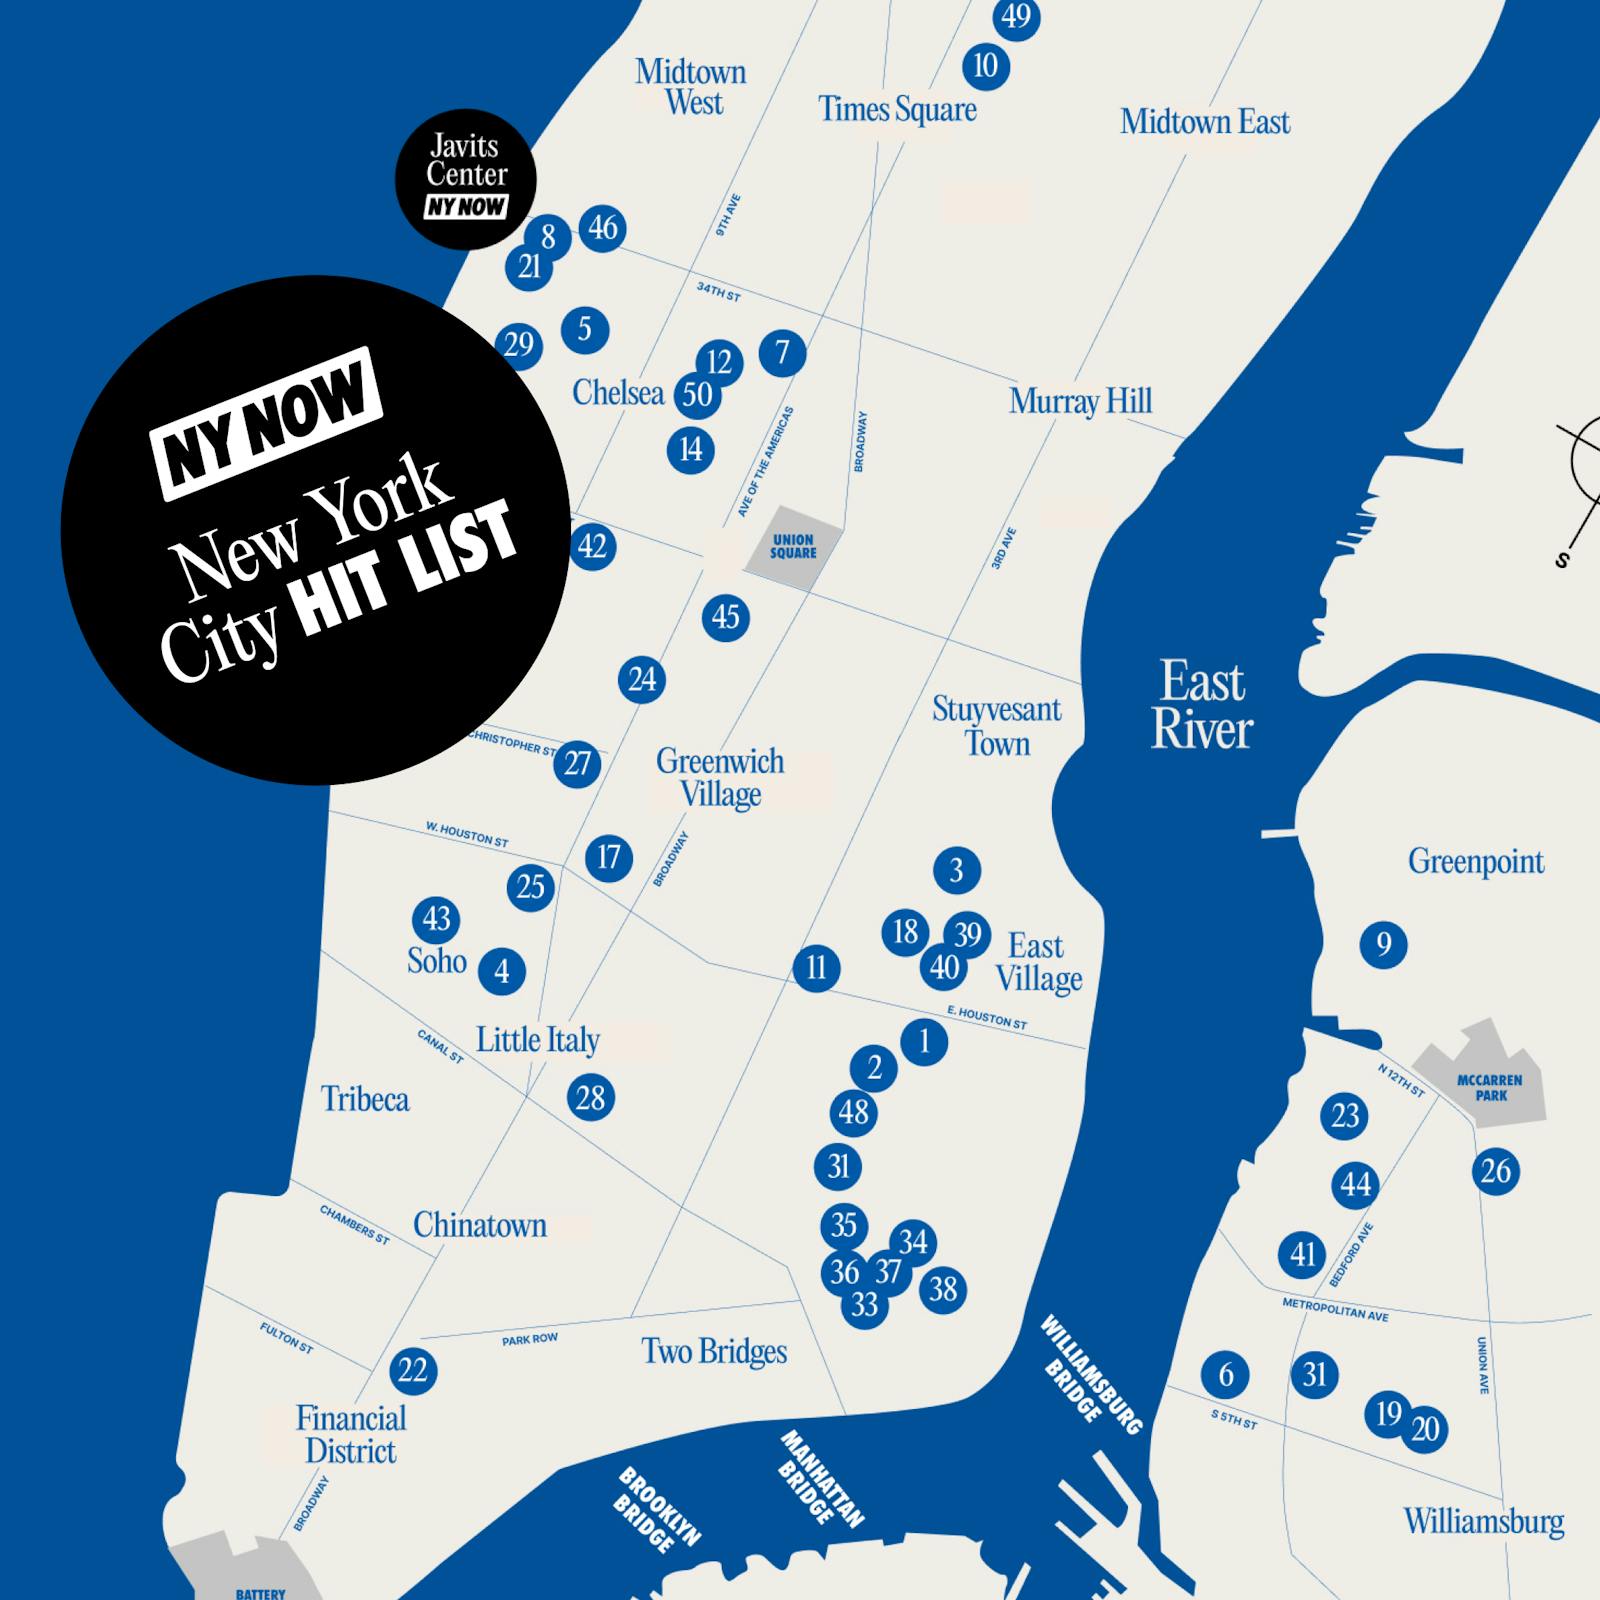 Our New York City Hit List!